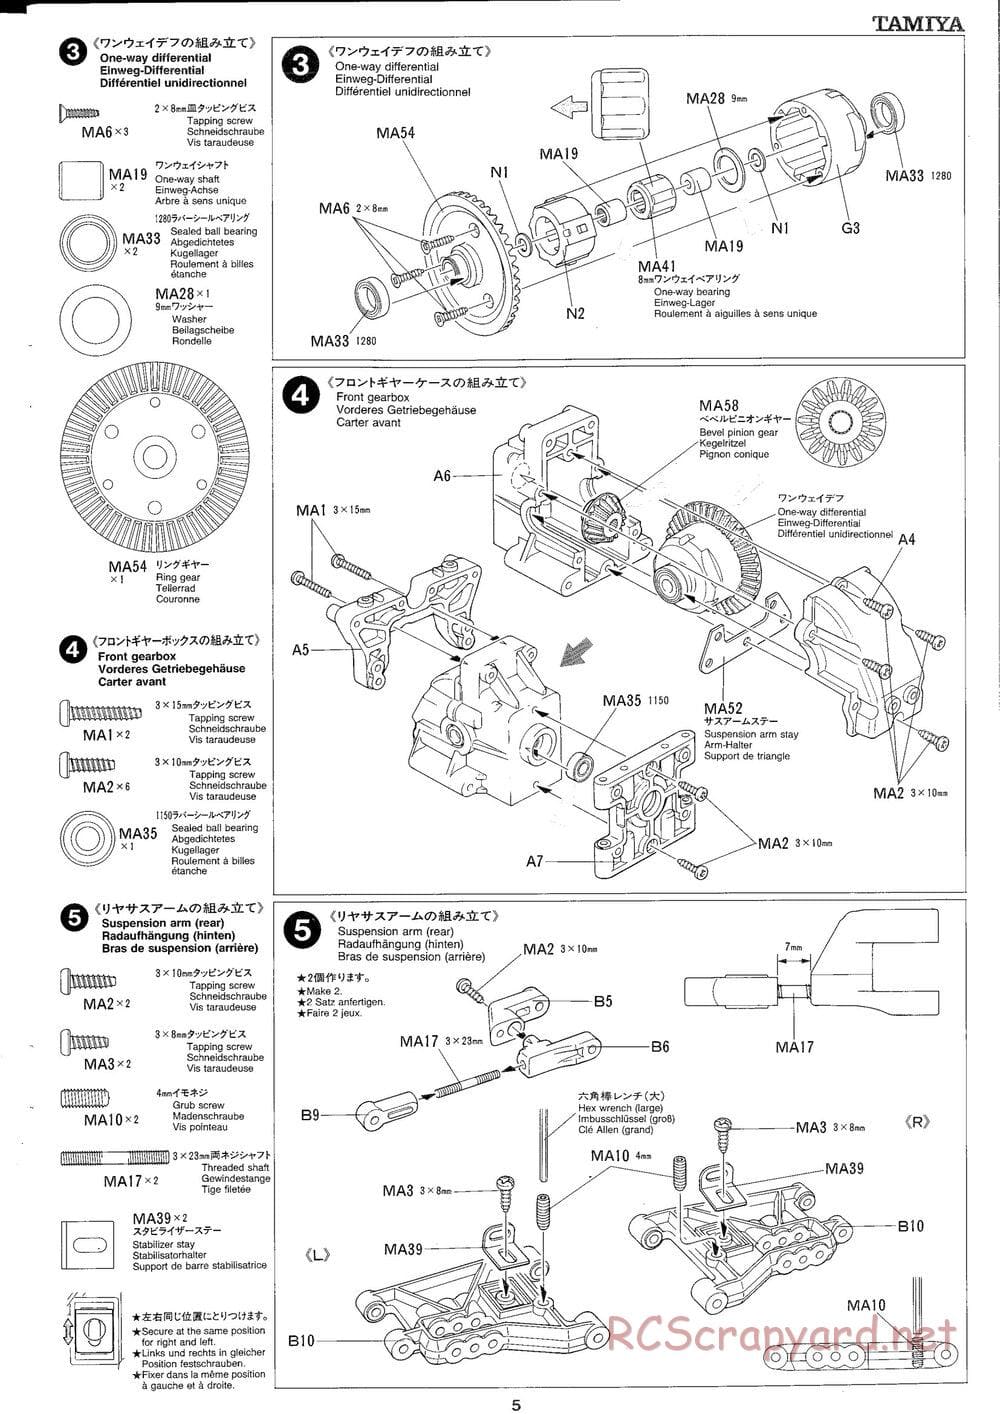 Tamiya - TGX Mk.1 TRF Special Chassis - Manual - Page 5